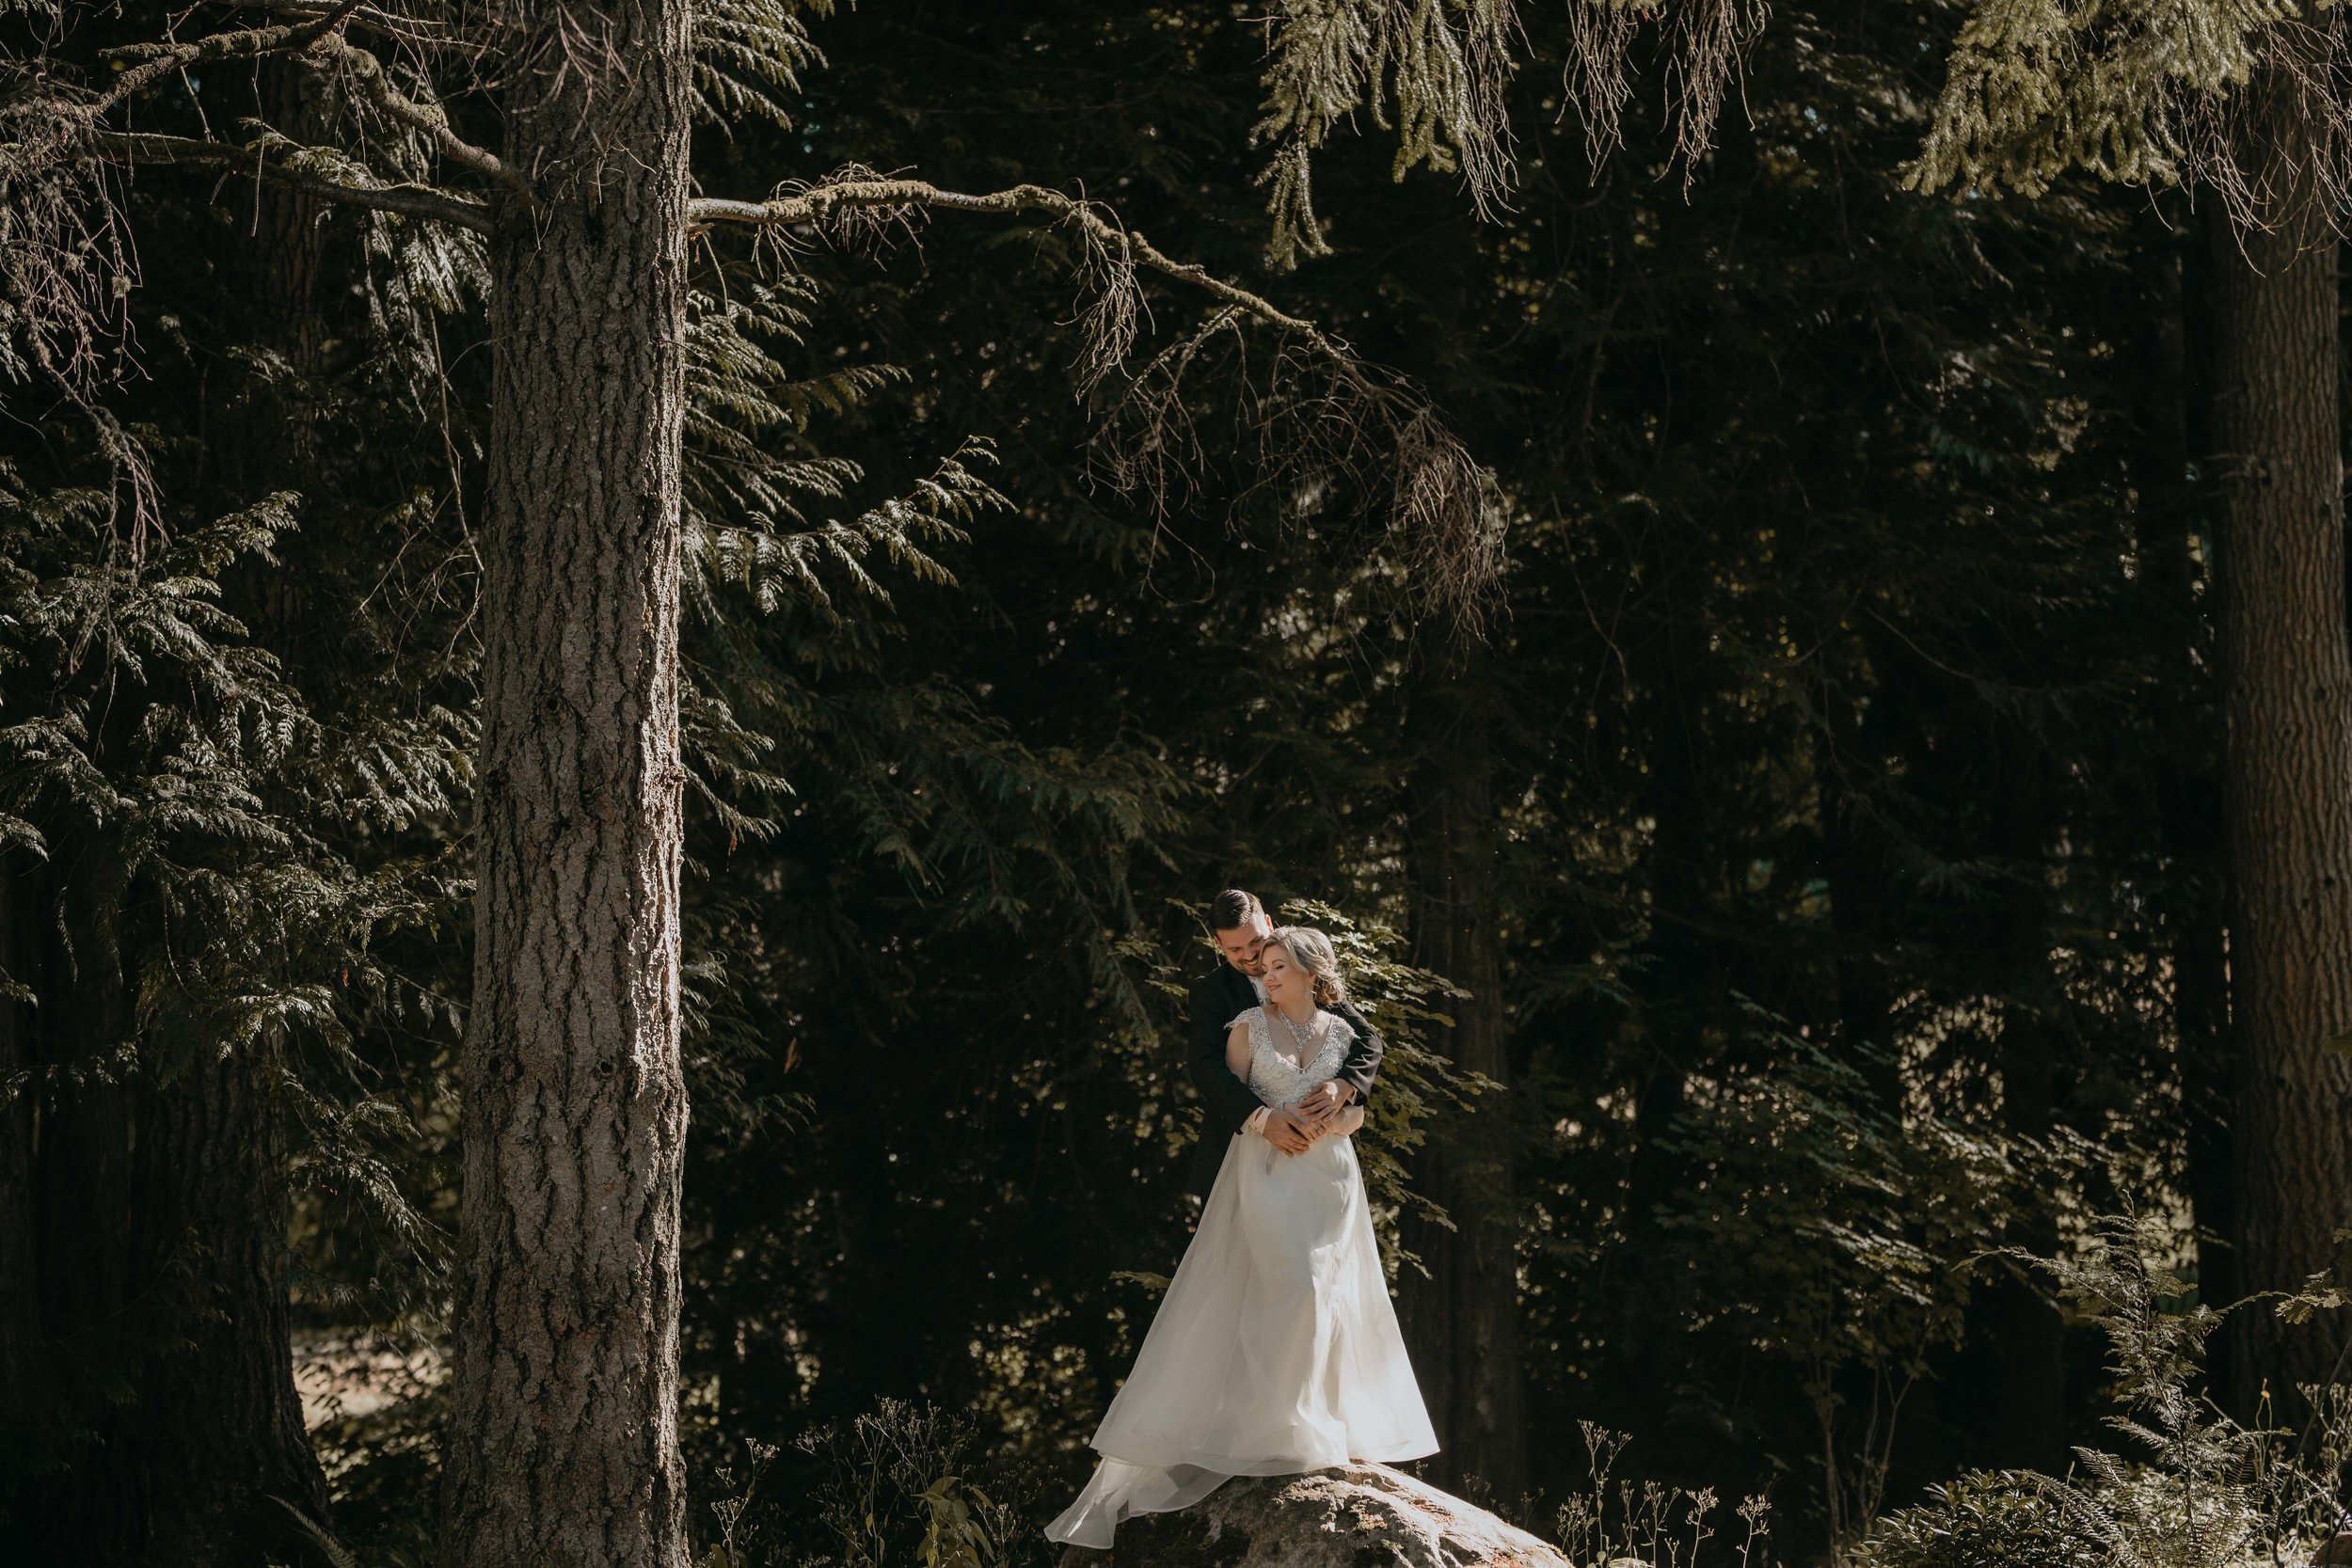 nicole-daacke-photography-kingston-house-bainbride-washington-wedding-photography-summer-wedding-lavendar-field-pacific-northwest-wedding-glam-forest-elopement-photographer-60.jpg